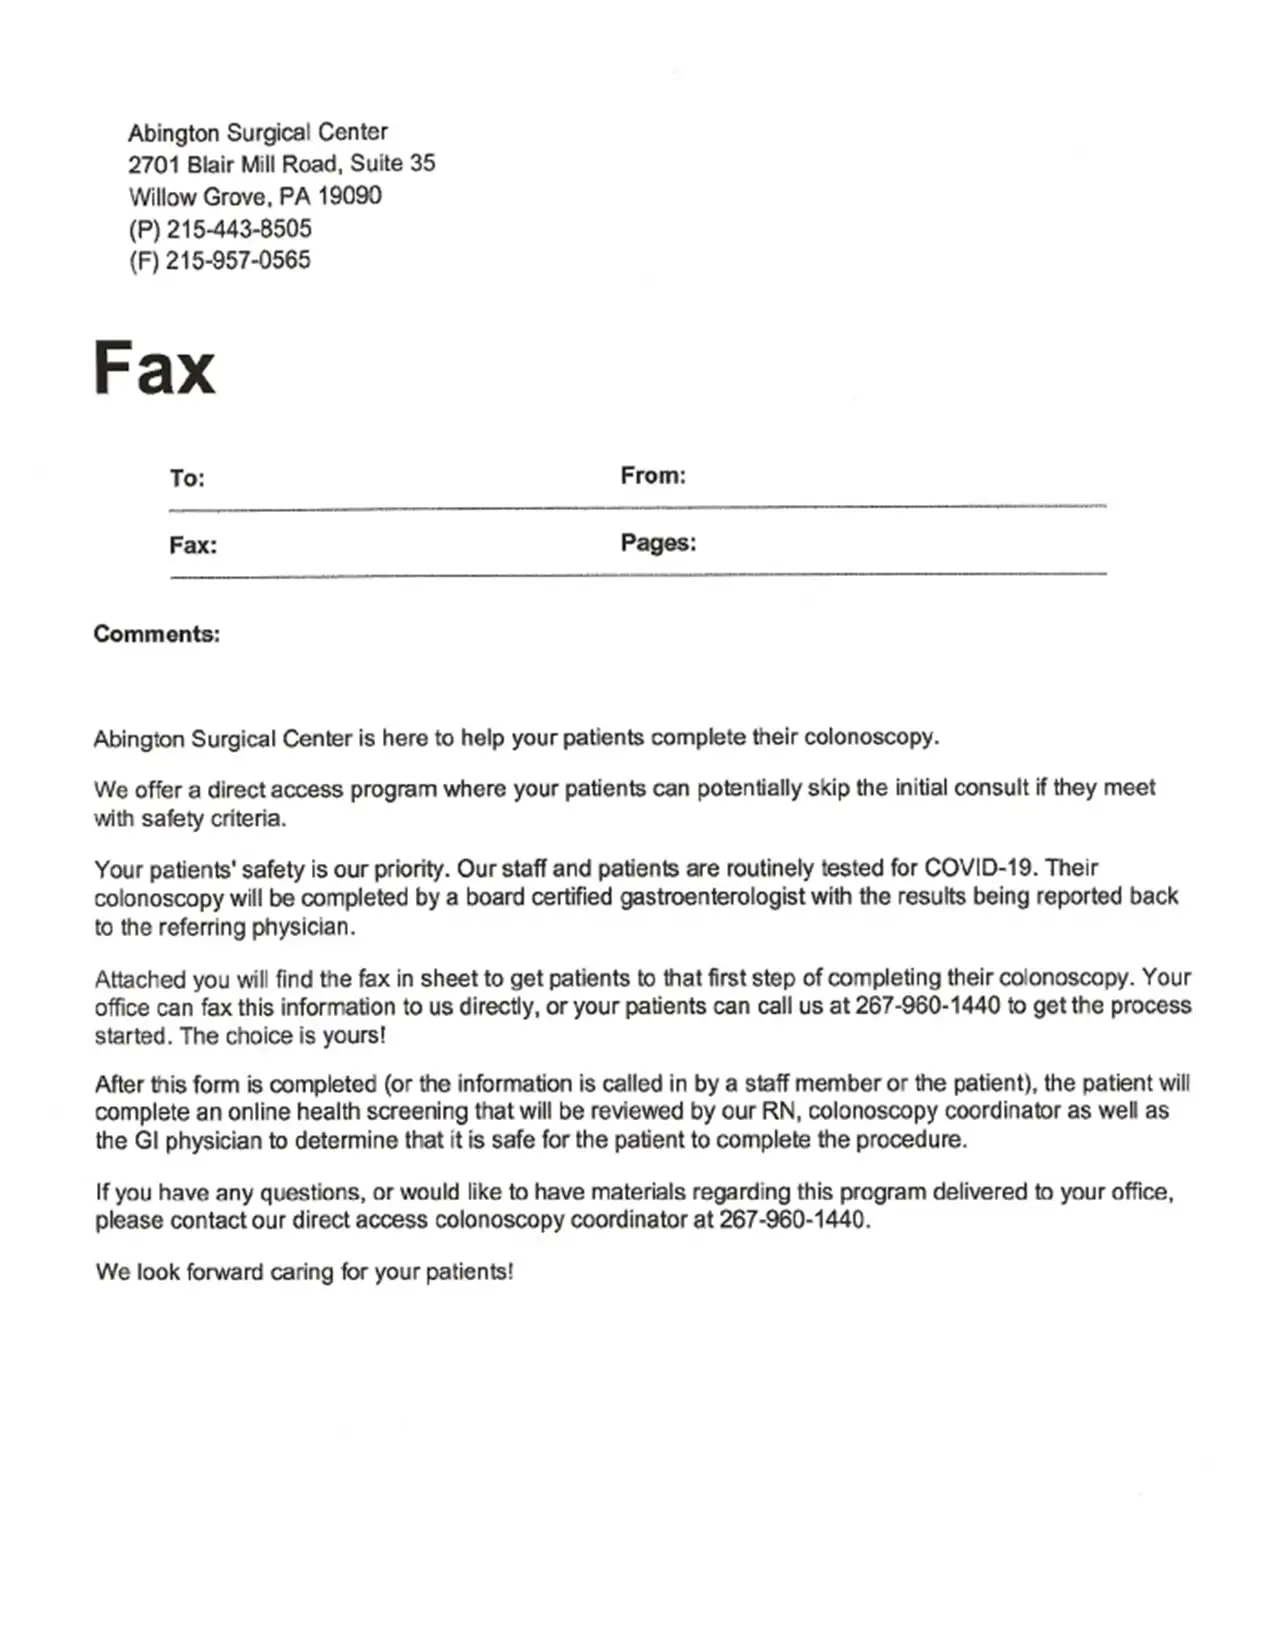 Marketing por fax y envío de faxes por difusión